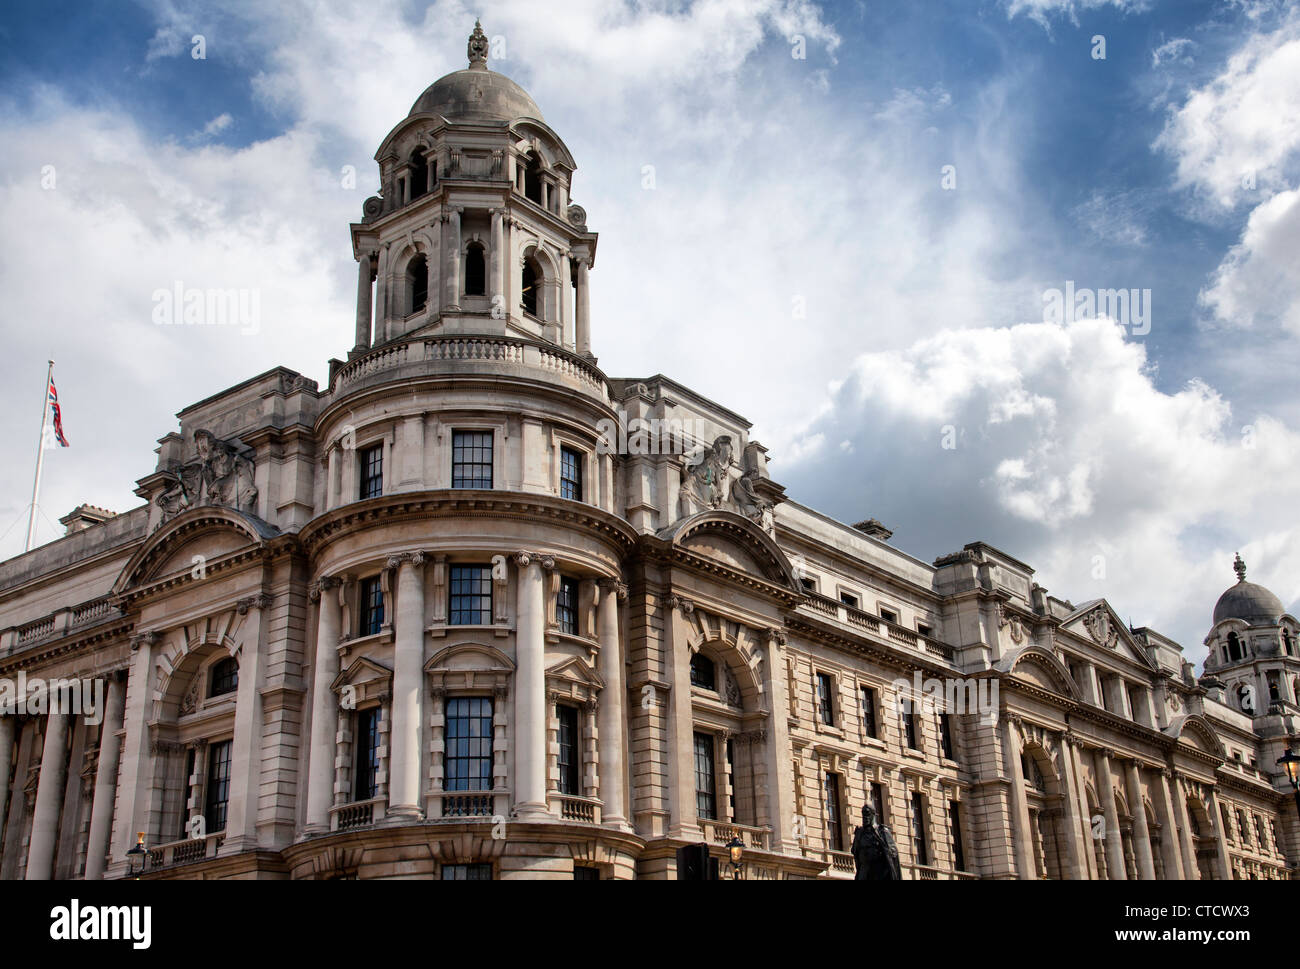 Old War Building on Whitehall - London UK Stock Photo